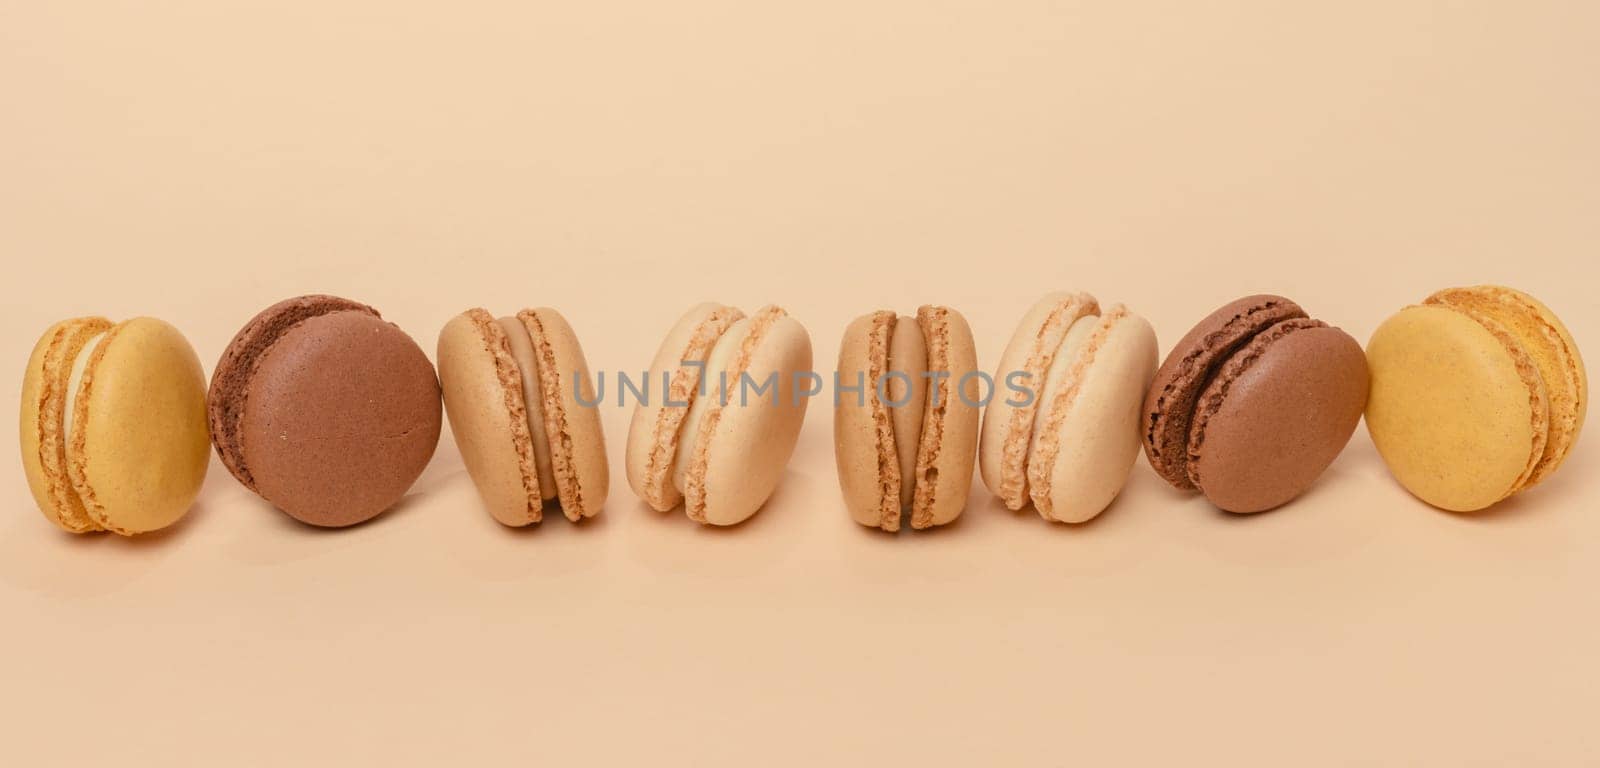 Chocolate macarons on a beige background, dessert